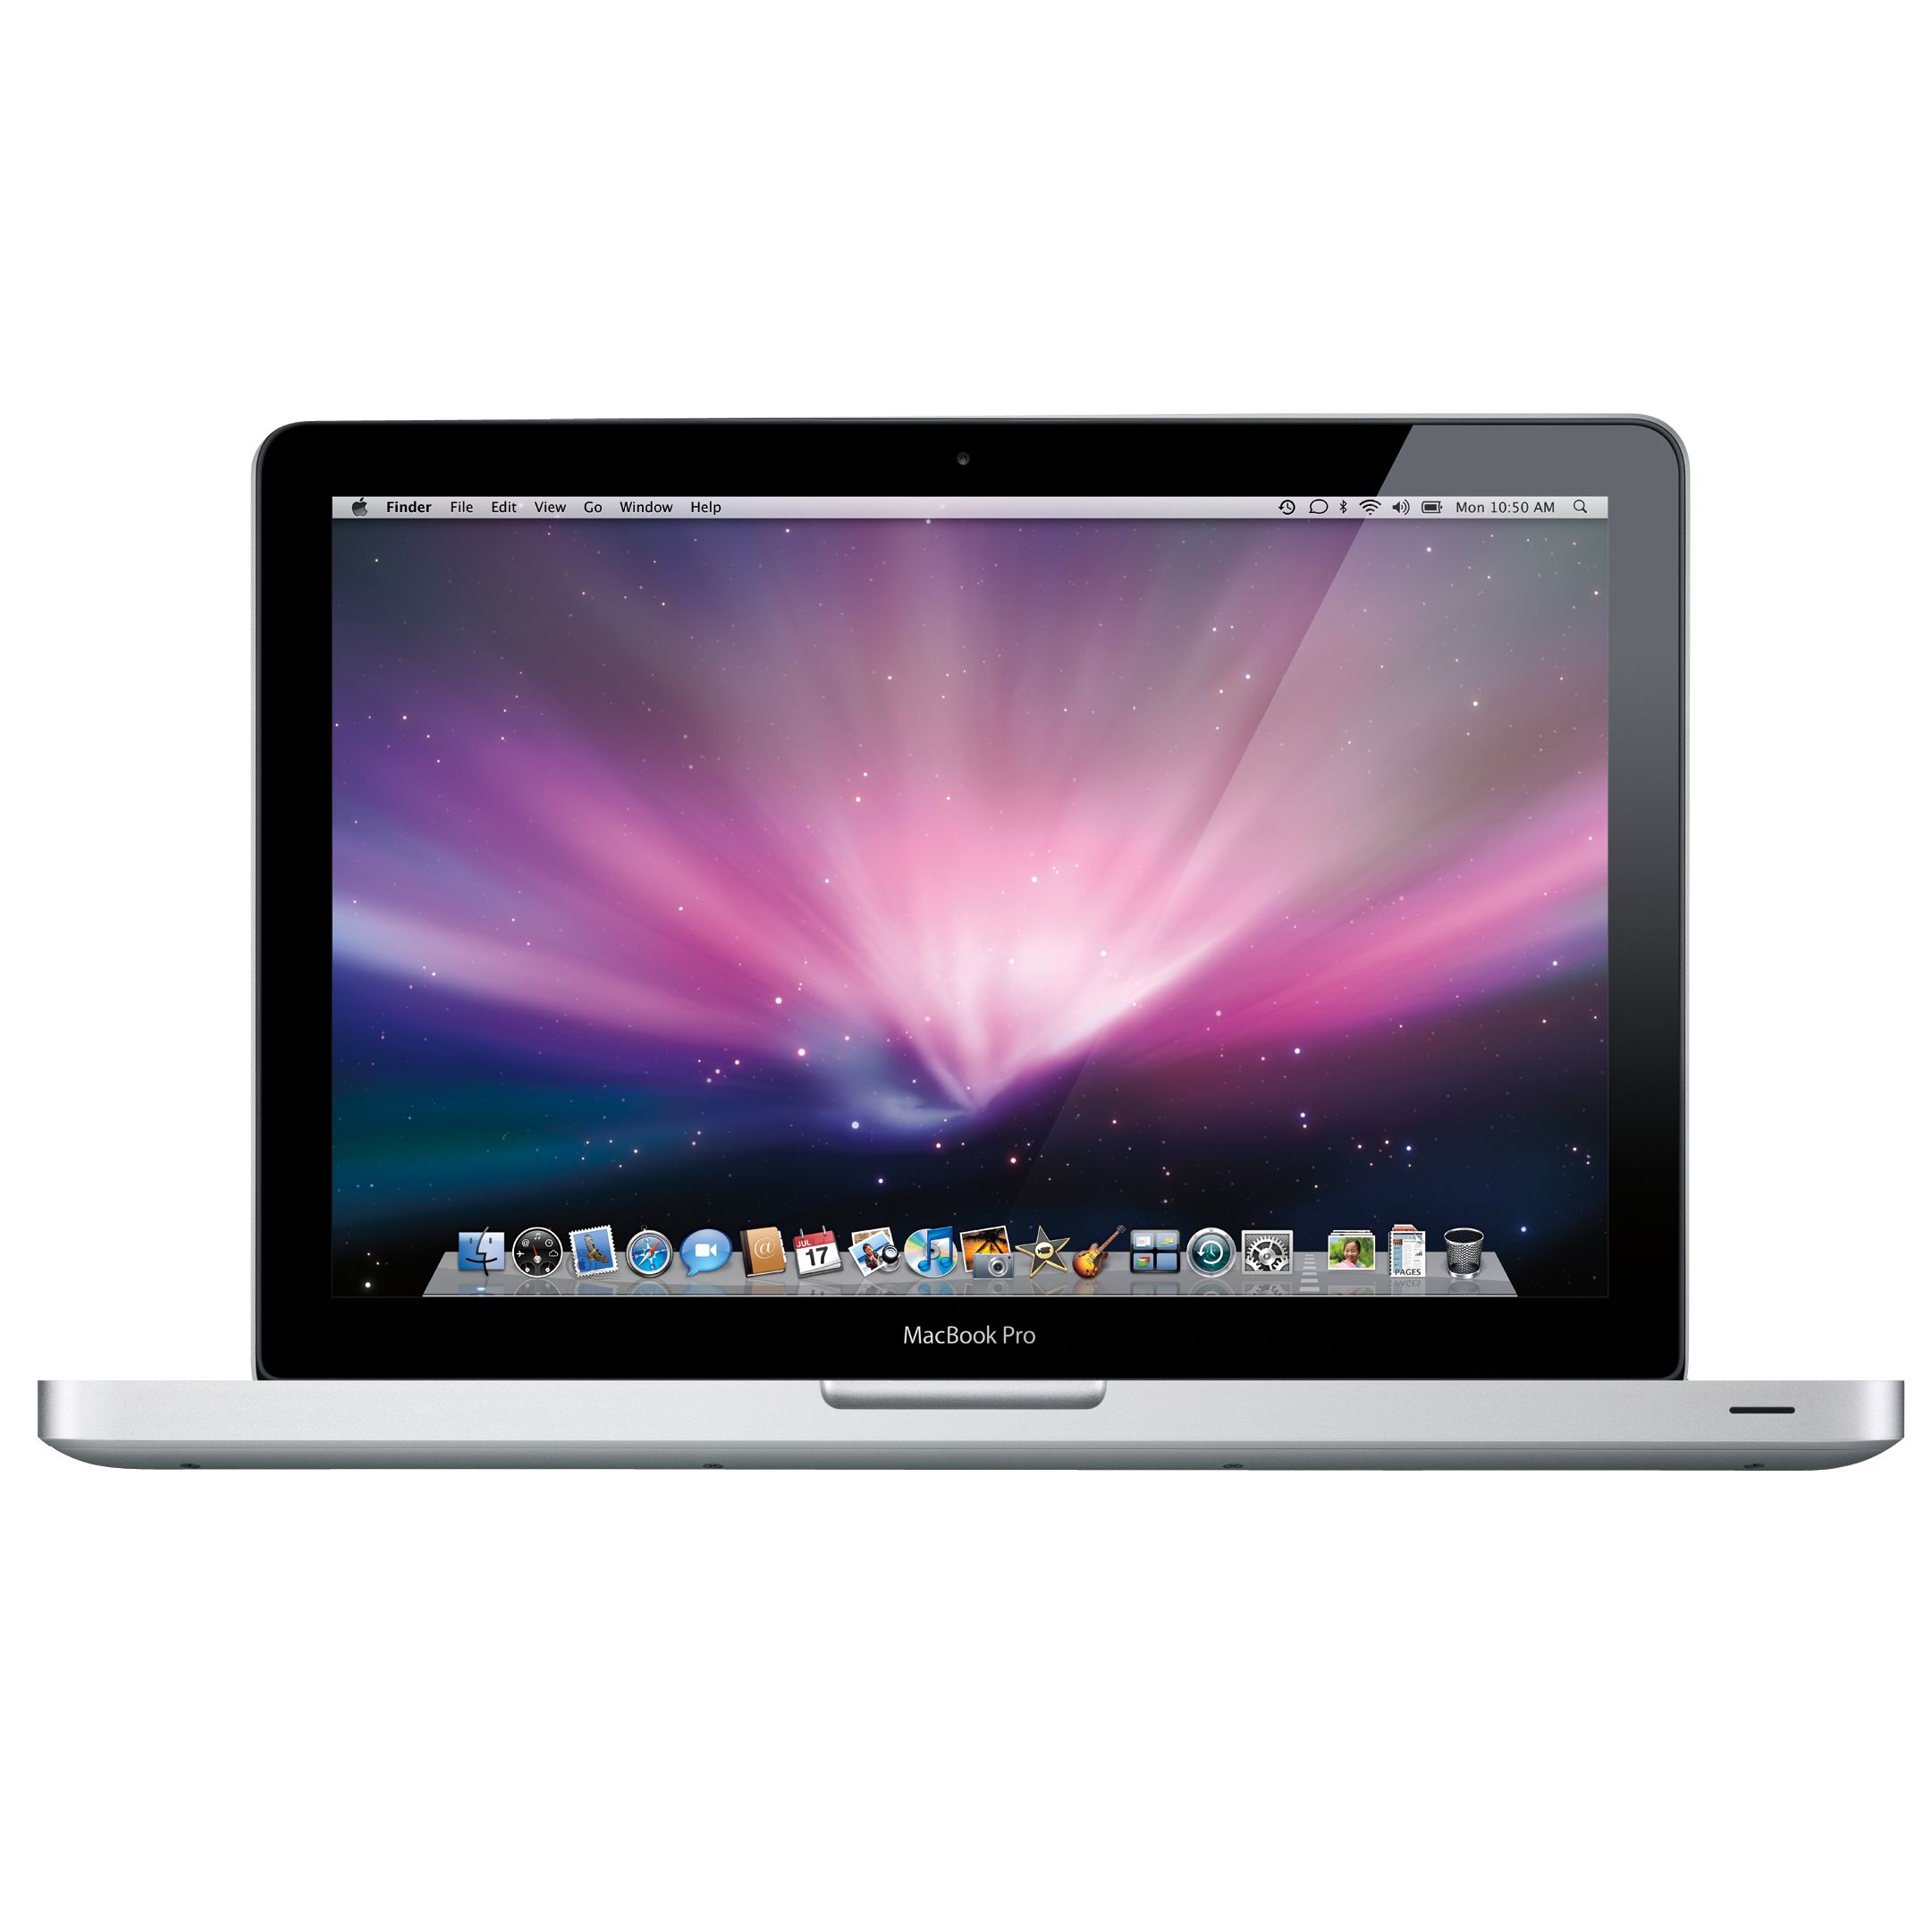 Apple MacBook Pro MC374B/A, Intel Core 2 Duo, 250GB, 2.4GHz, 4GB RAM with 13.3 Inch Display at John Lewis